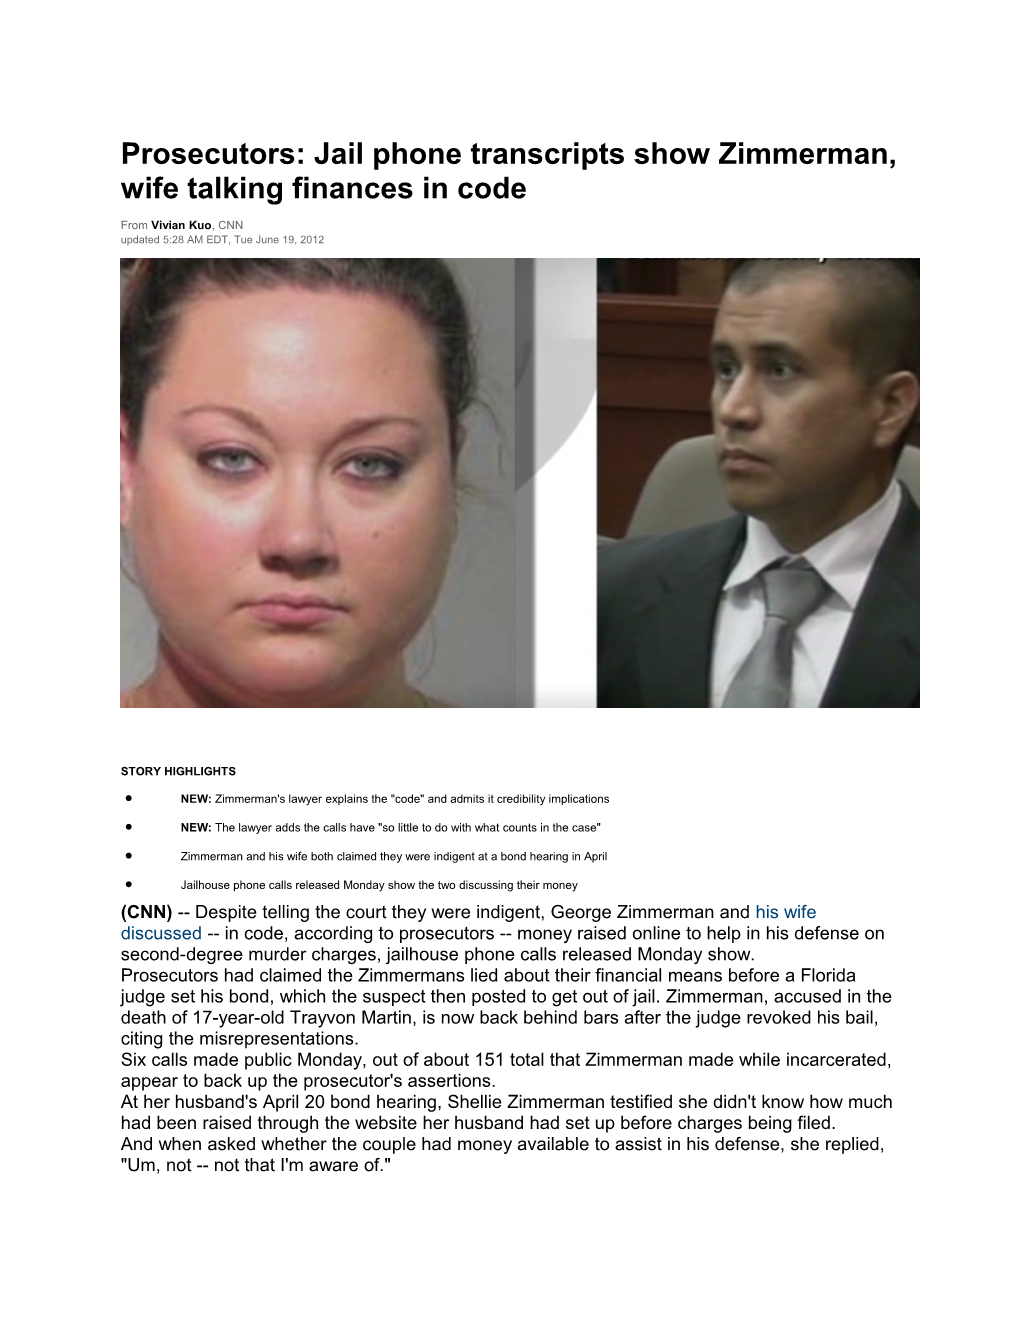 Prosecutors: Jail Phone Transcripts Show Zimmerman, Wife Talking Finances in Code